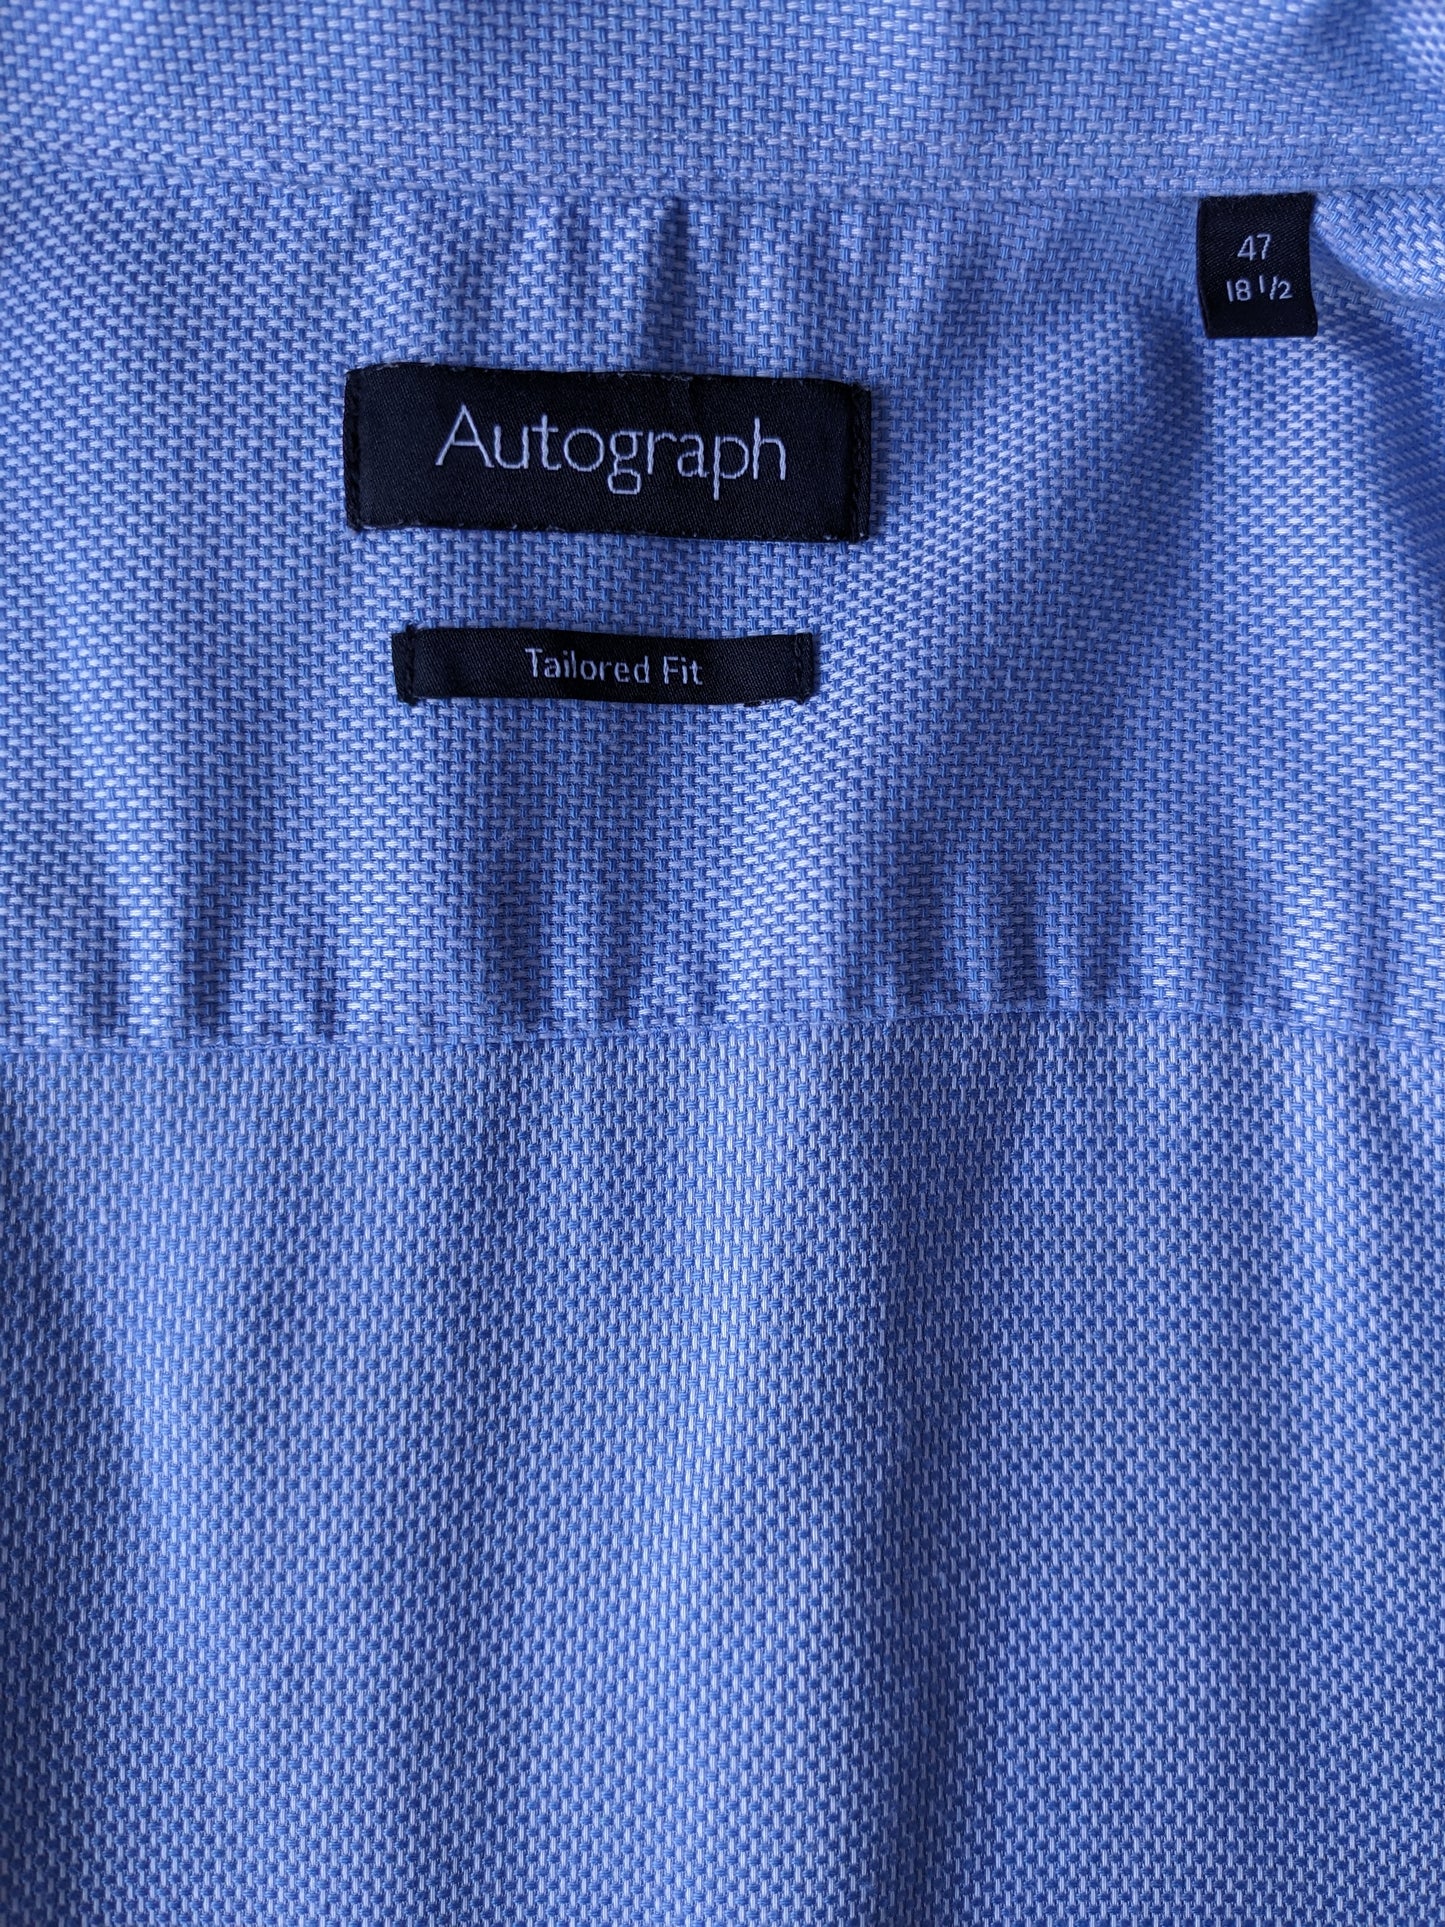 Camisa de autógrafos. Motivo blanco azul. Tamaño 47 / 2XL-XXL. Ajuste a medida.